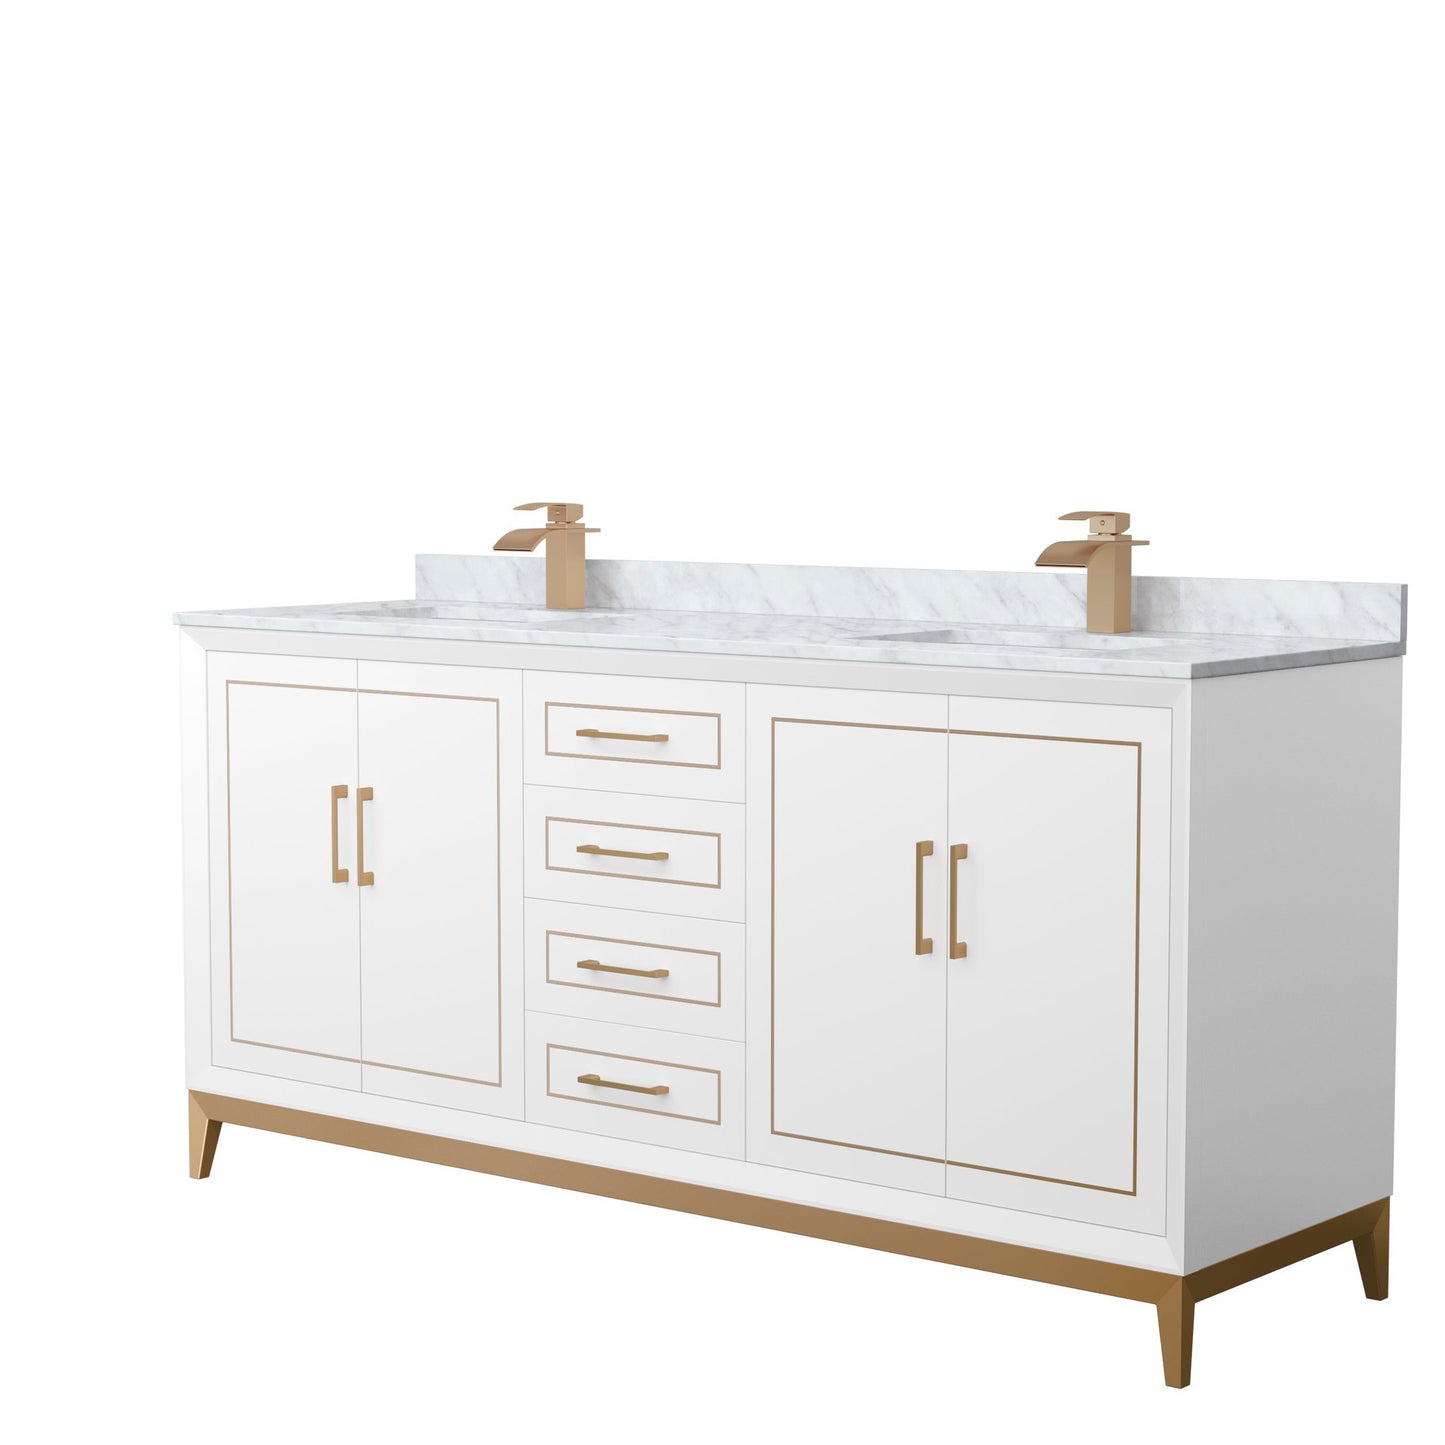 Wyndham Collection Marlena 72" Double Bathroom Vanity in White, White Carrara Marble Countertop, Undermount Square Sinks, Satin Bronze Trim